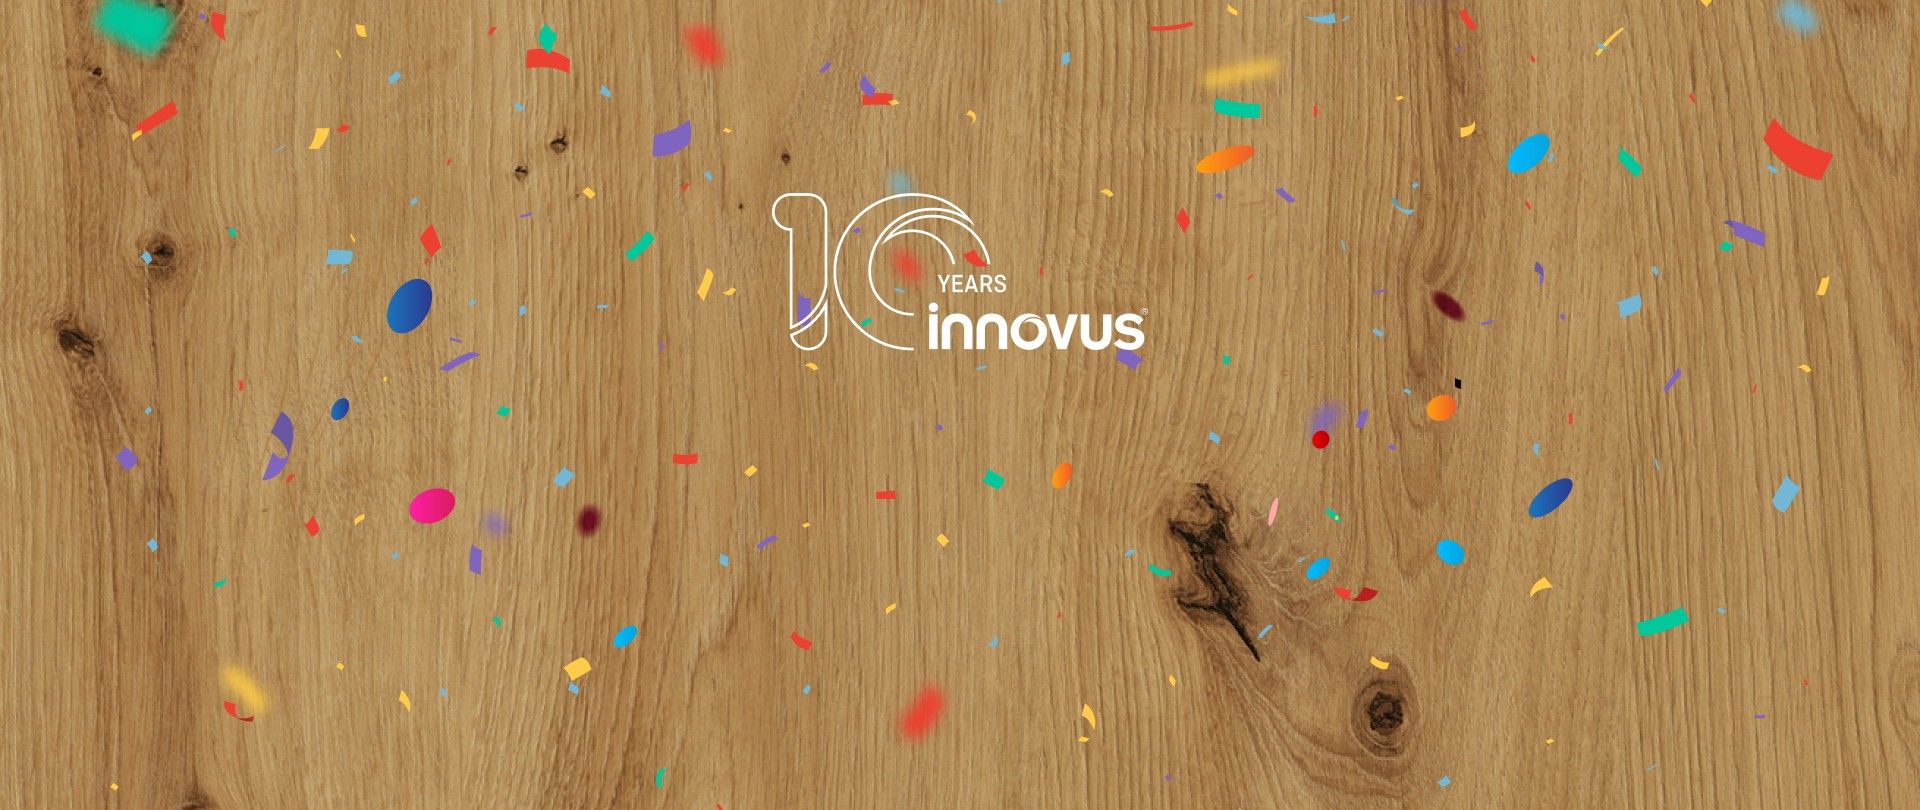 La marque internationale Innovus fête son 10e anniversaire